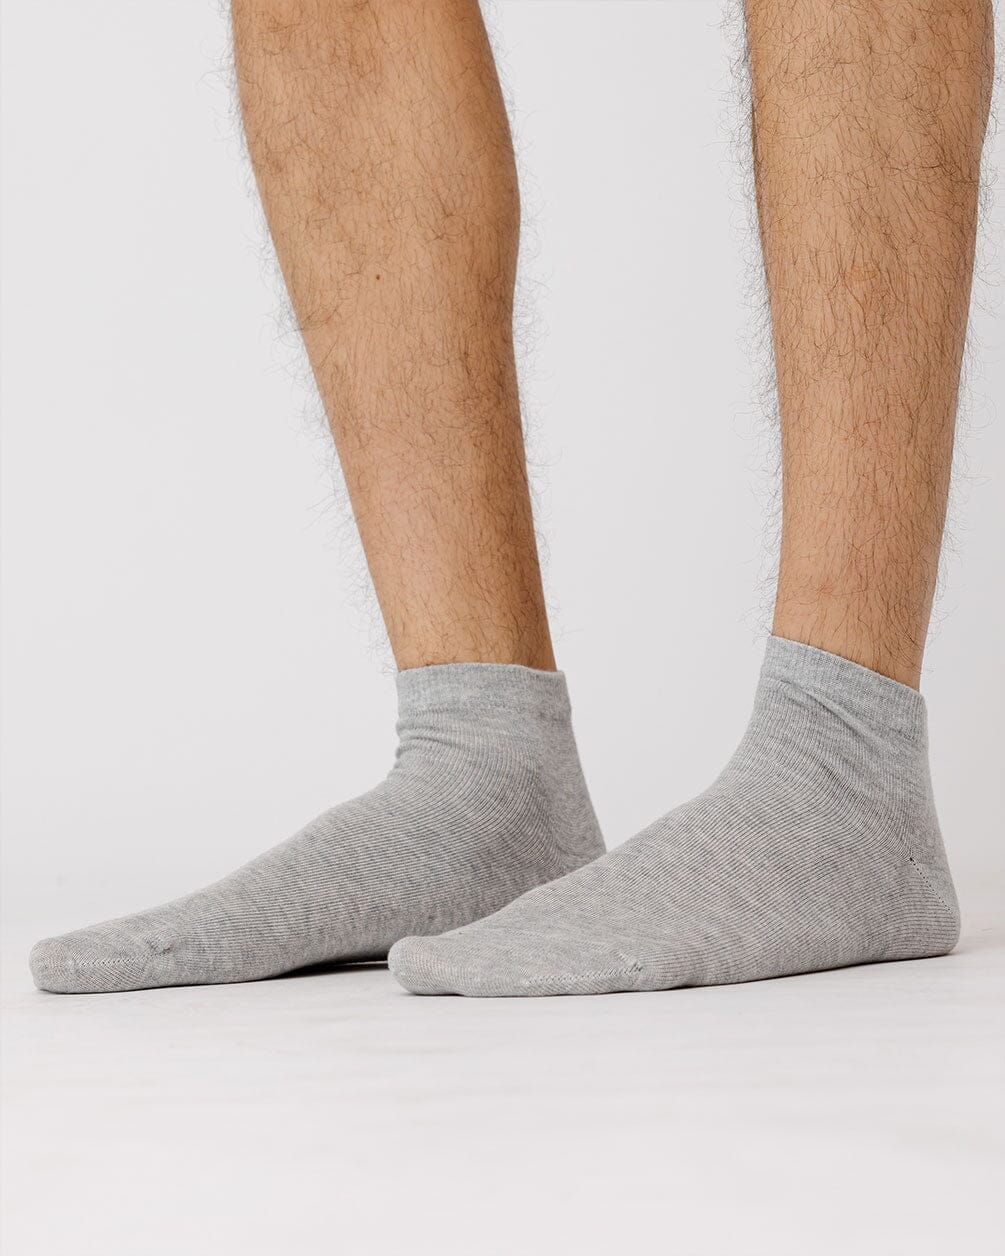 Solid Grey Short Socks Short Socks In Your Shoe 